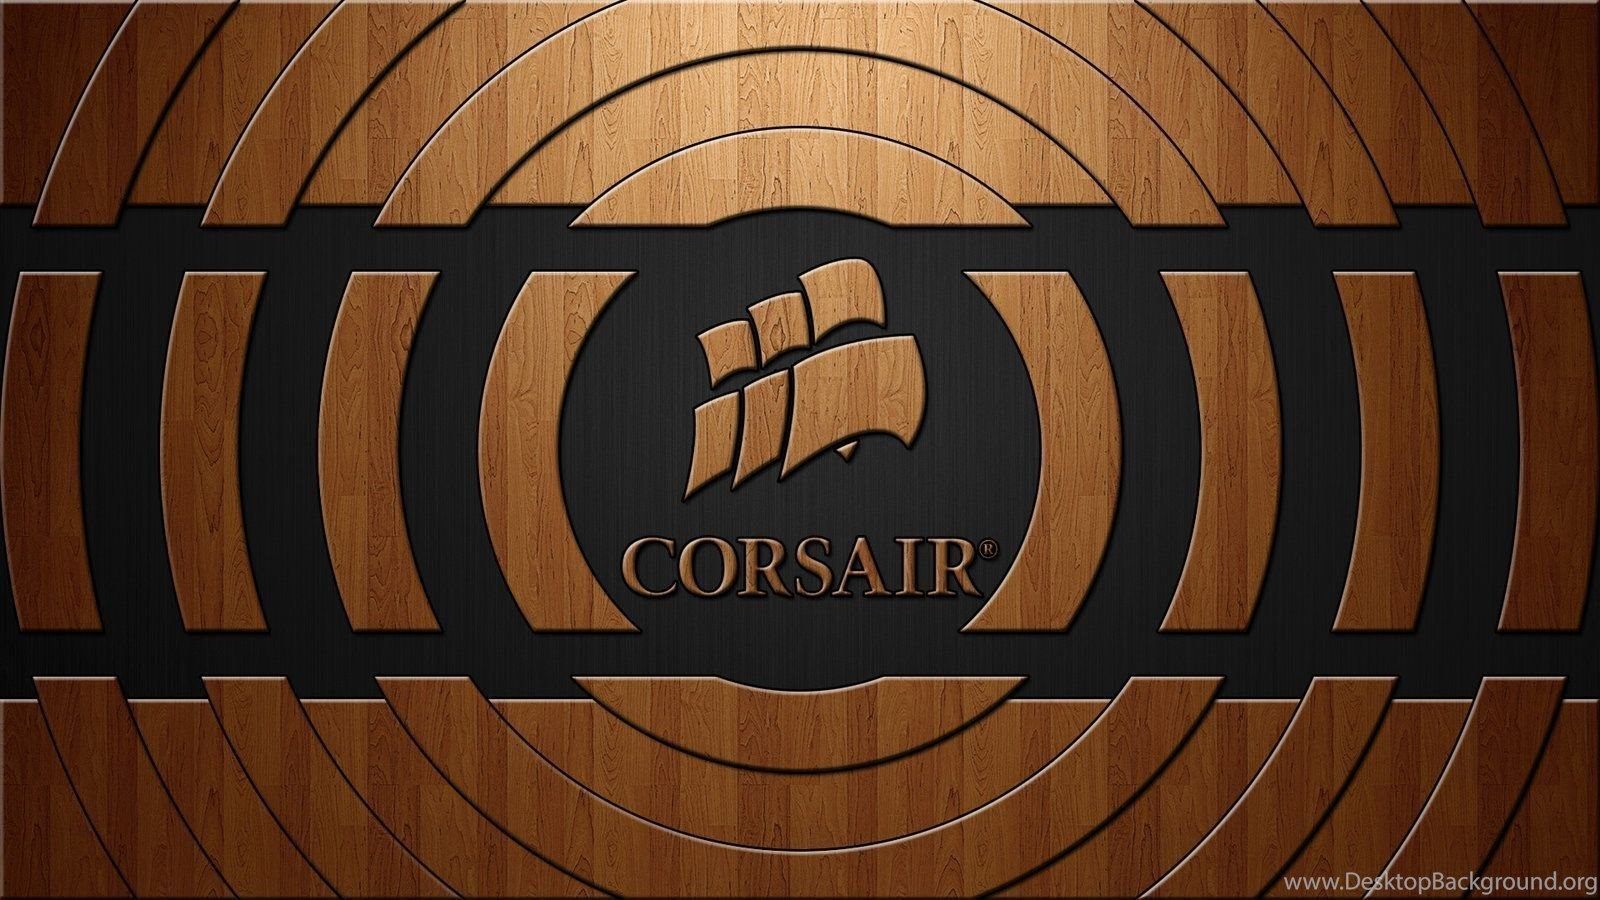 Corsair Red HD Wallpaper 2020